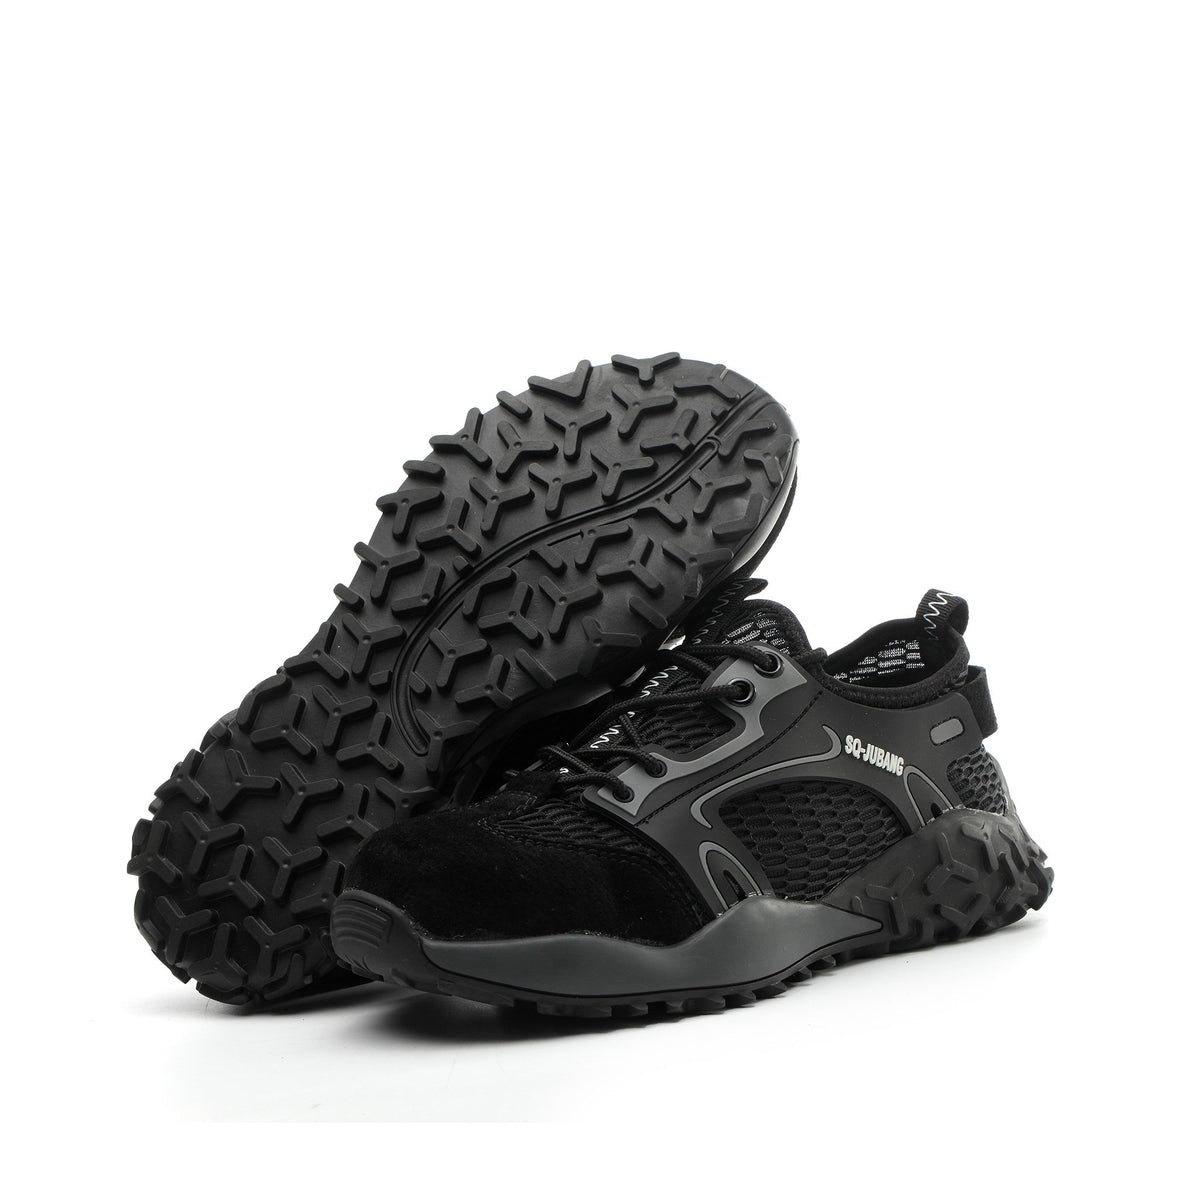 Zip Black - Indestructible Shoes